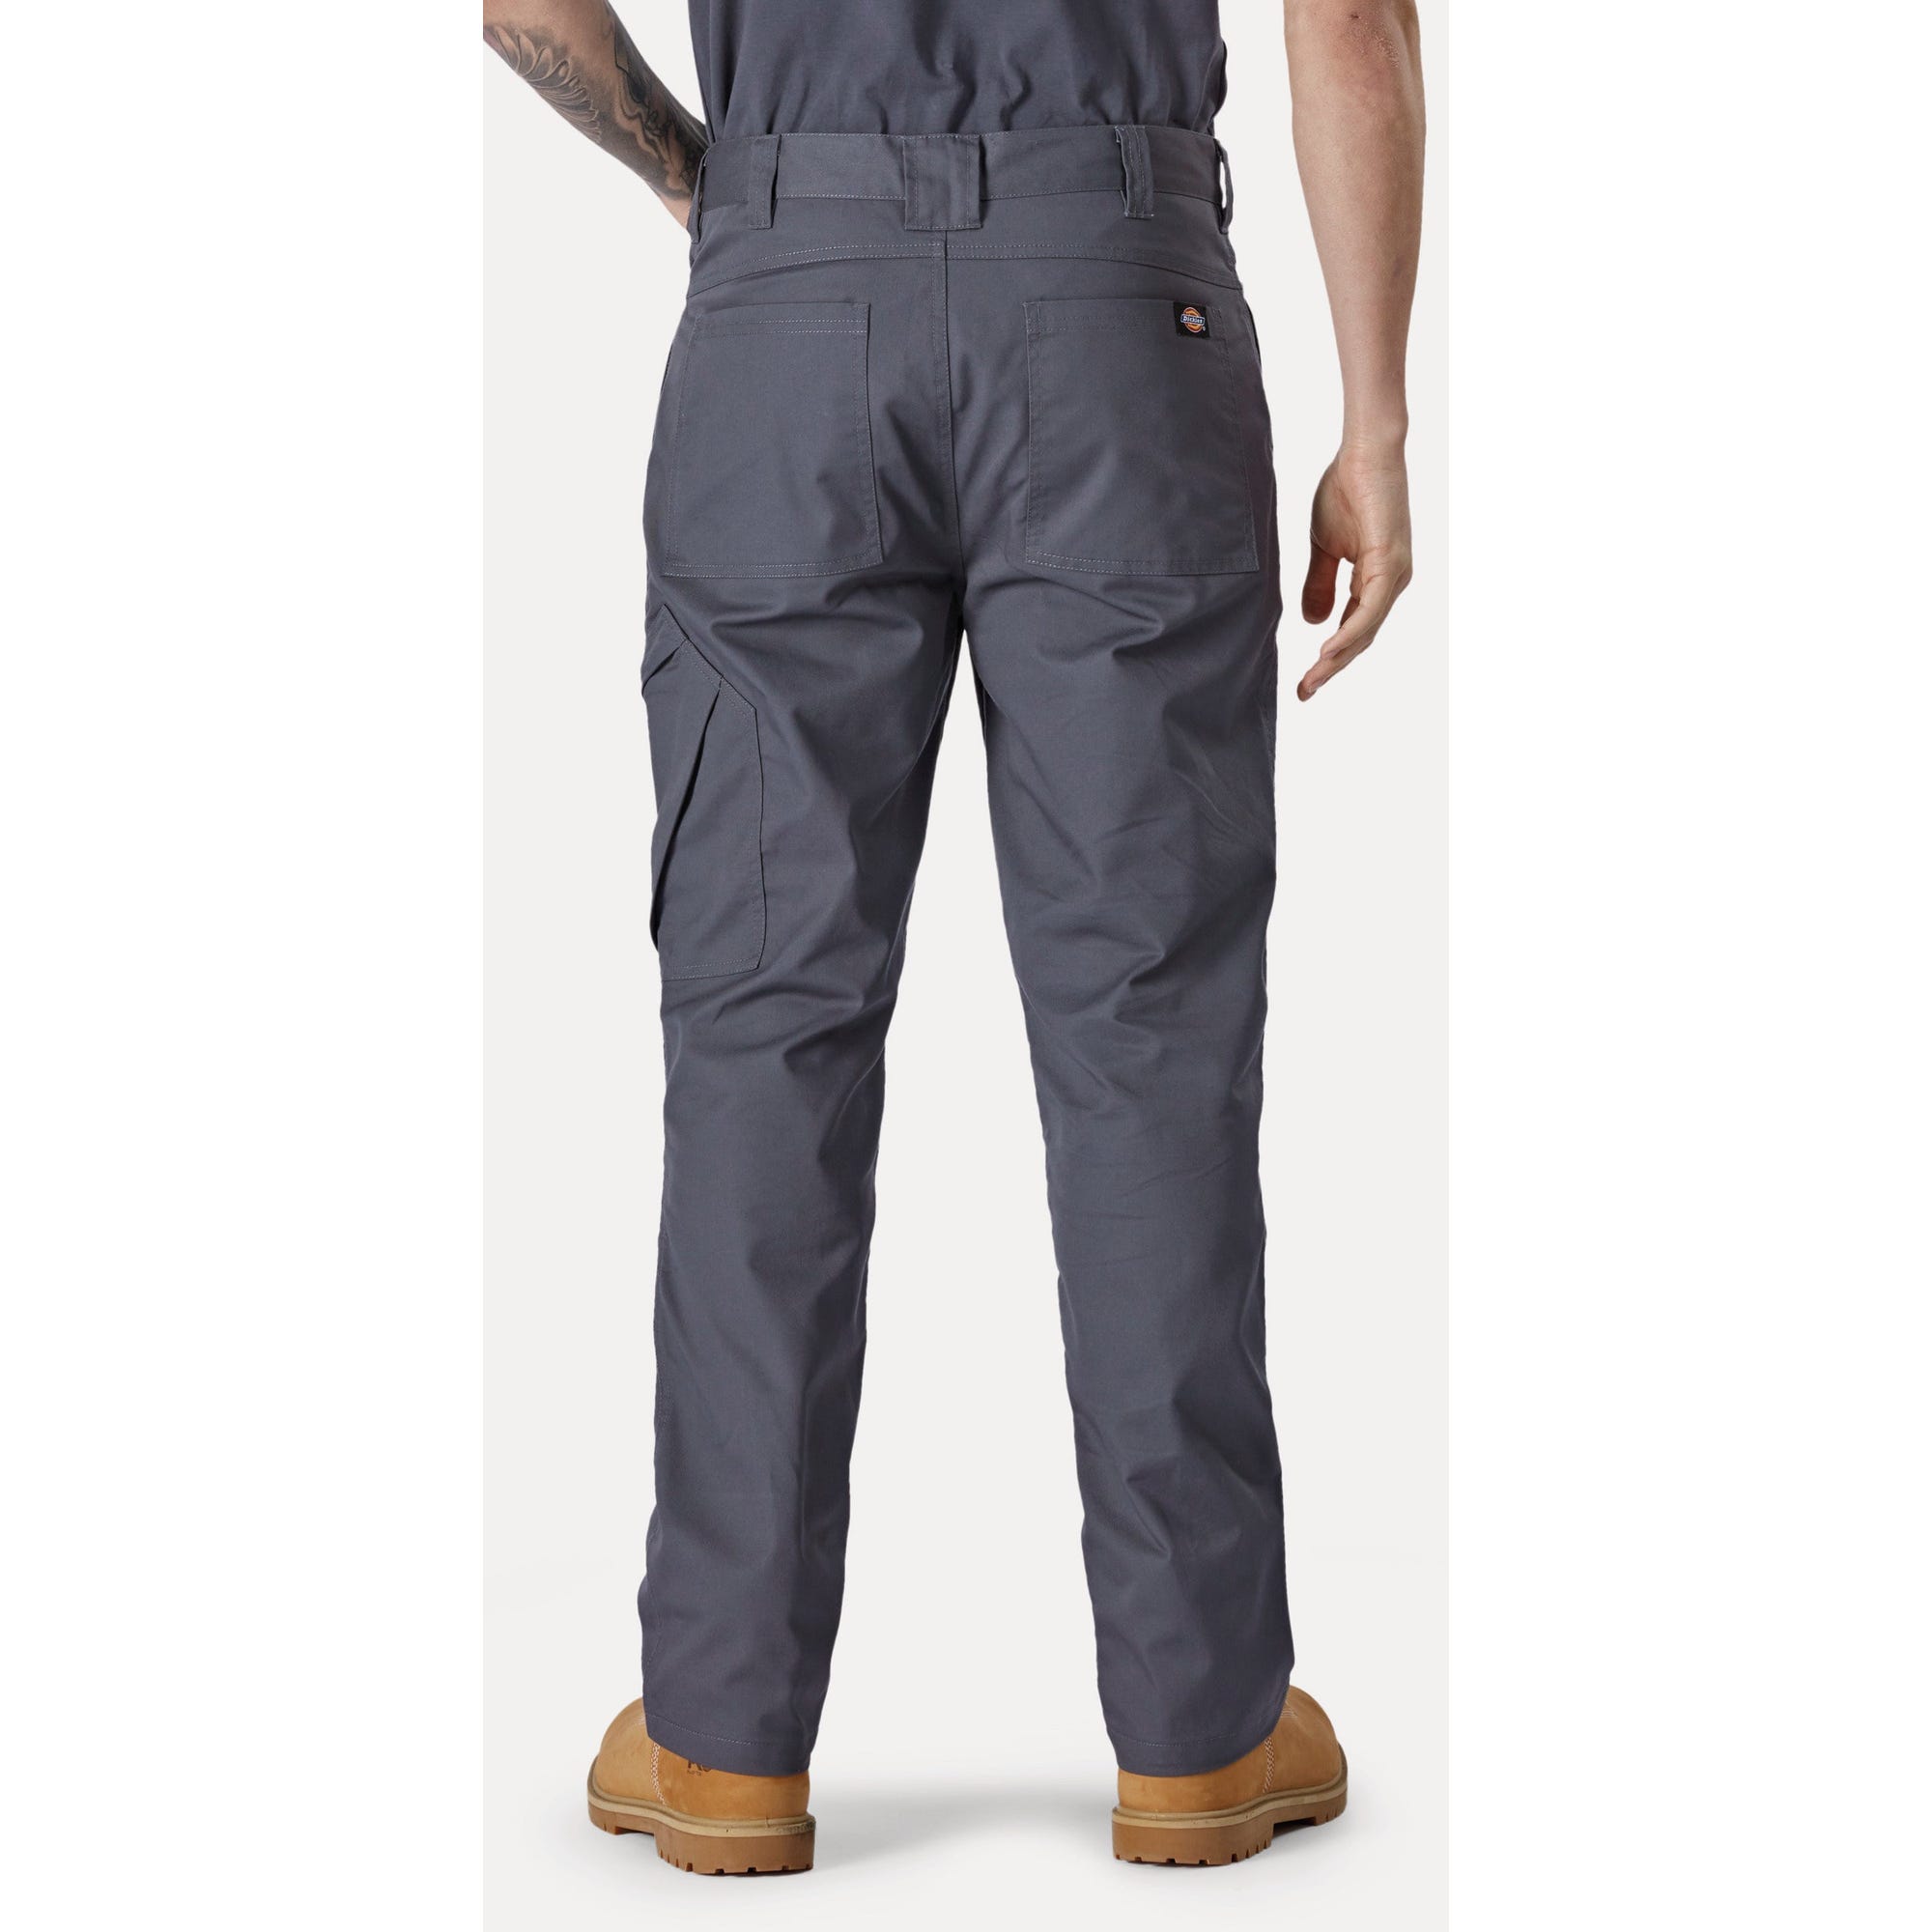 Pantalon de travail Action Flex bleu marine - Dickies - Taille 36 8